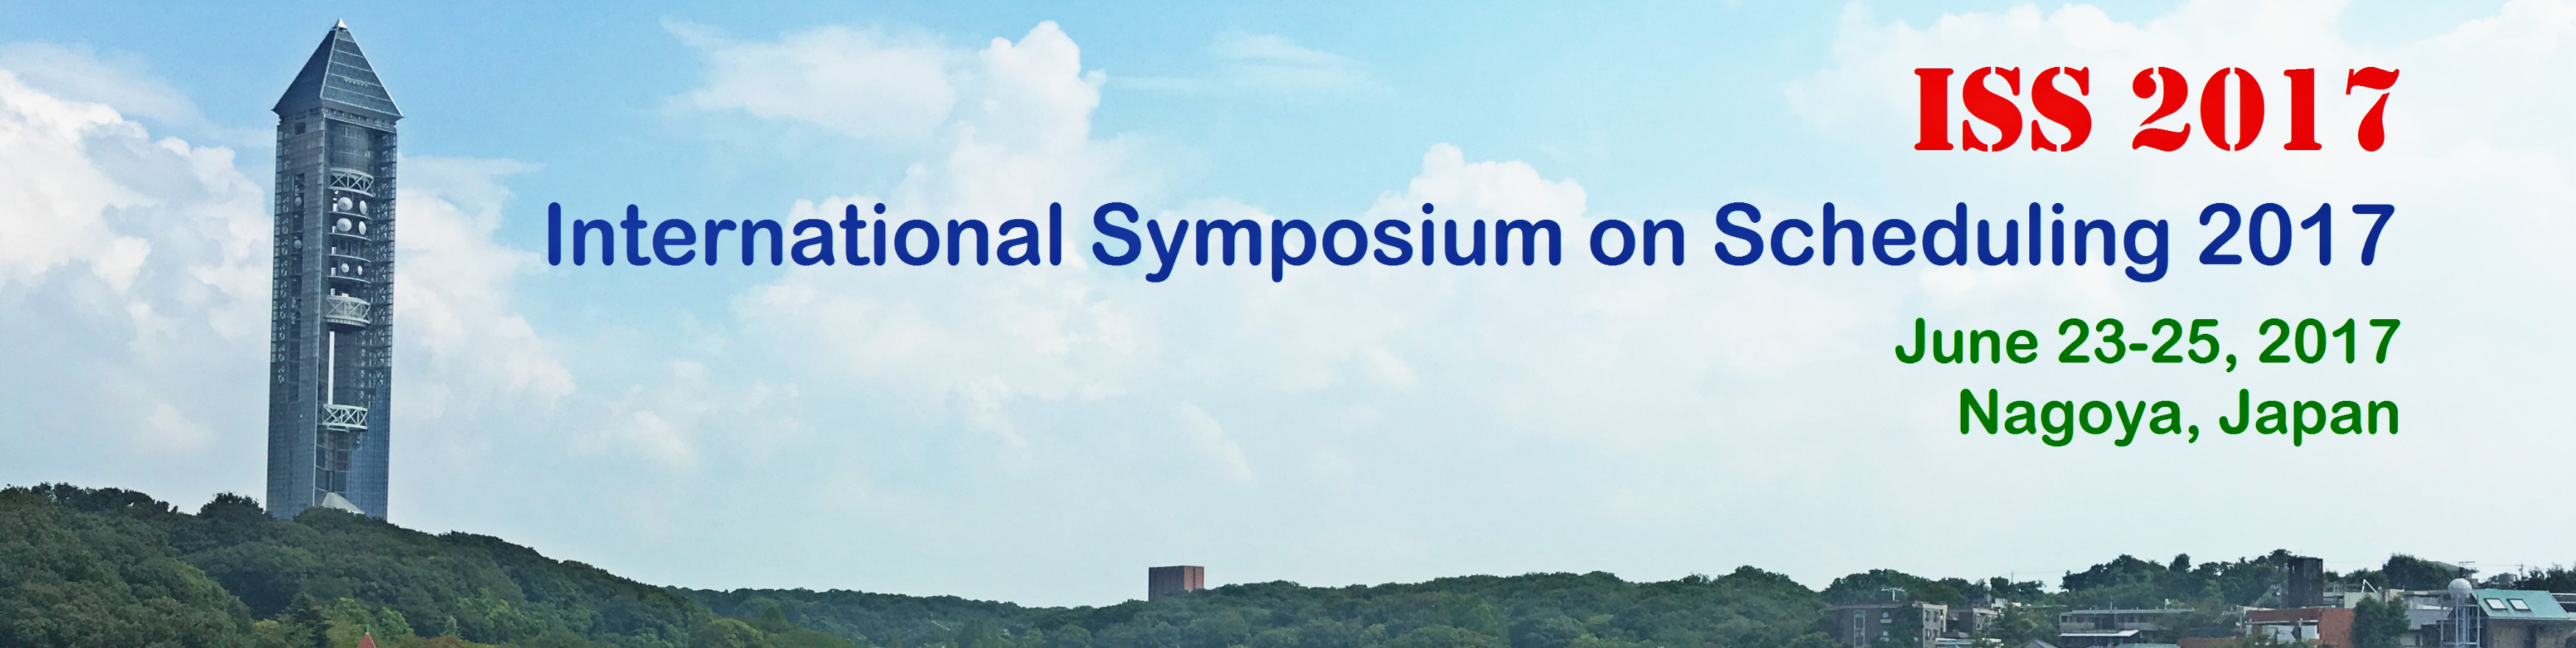 Title: International Symposium on Scheduling 2017